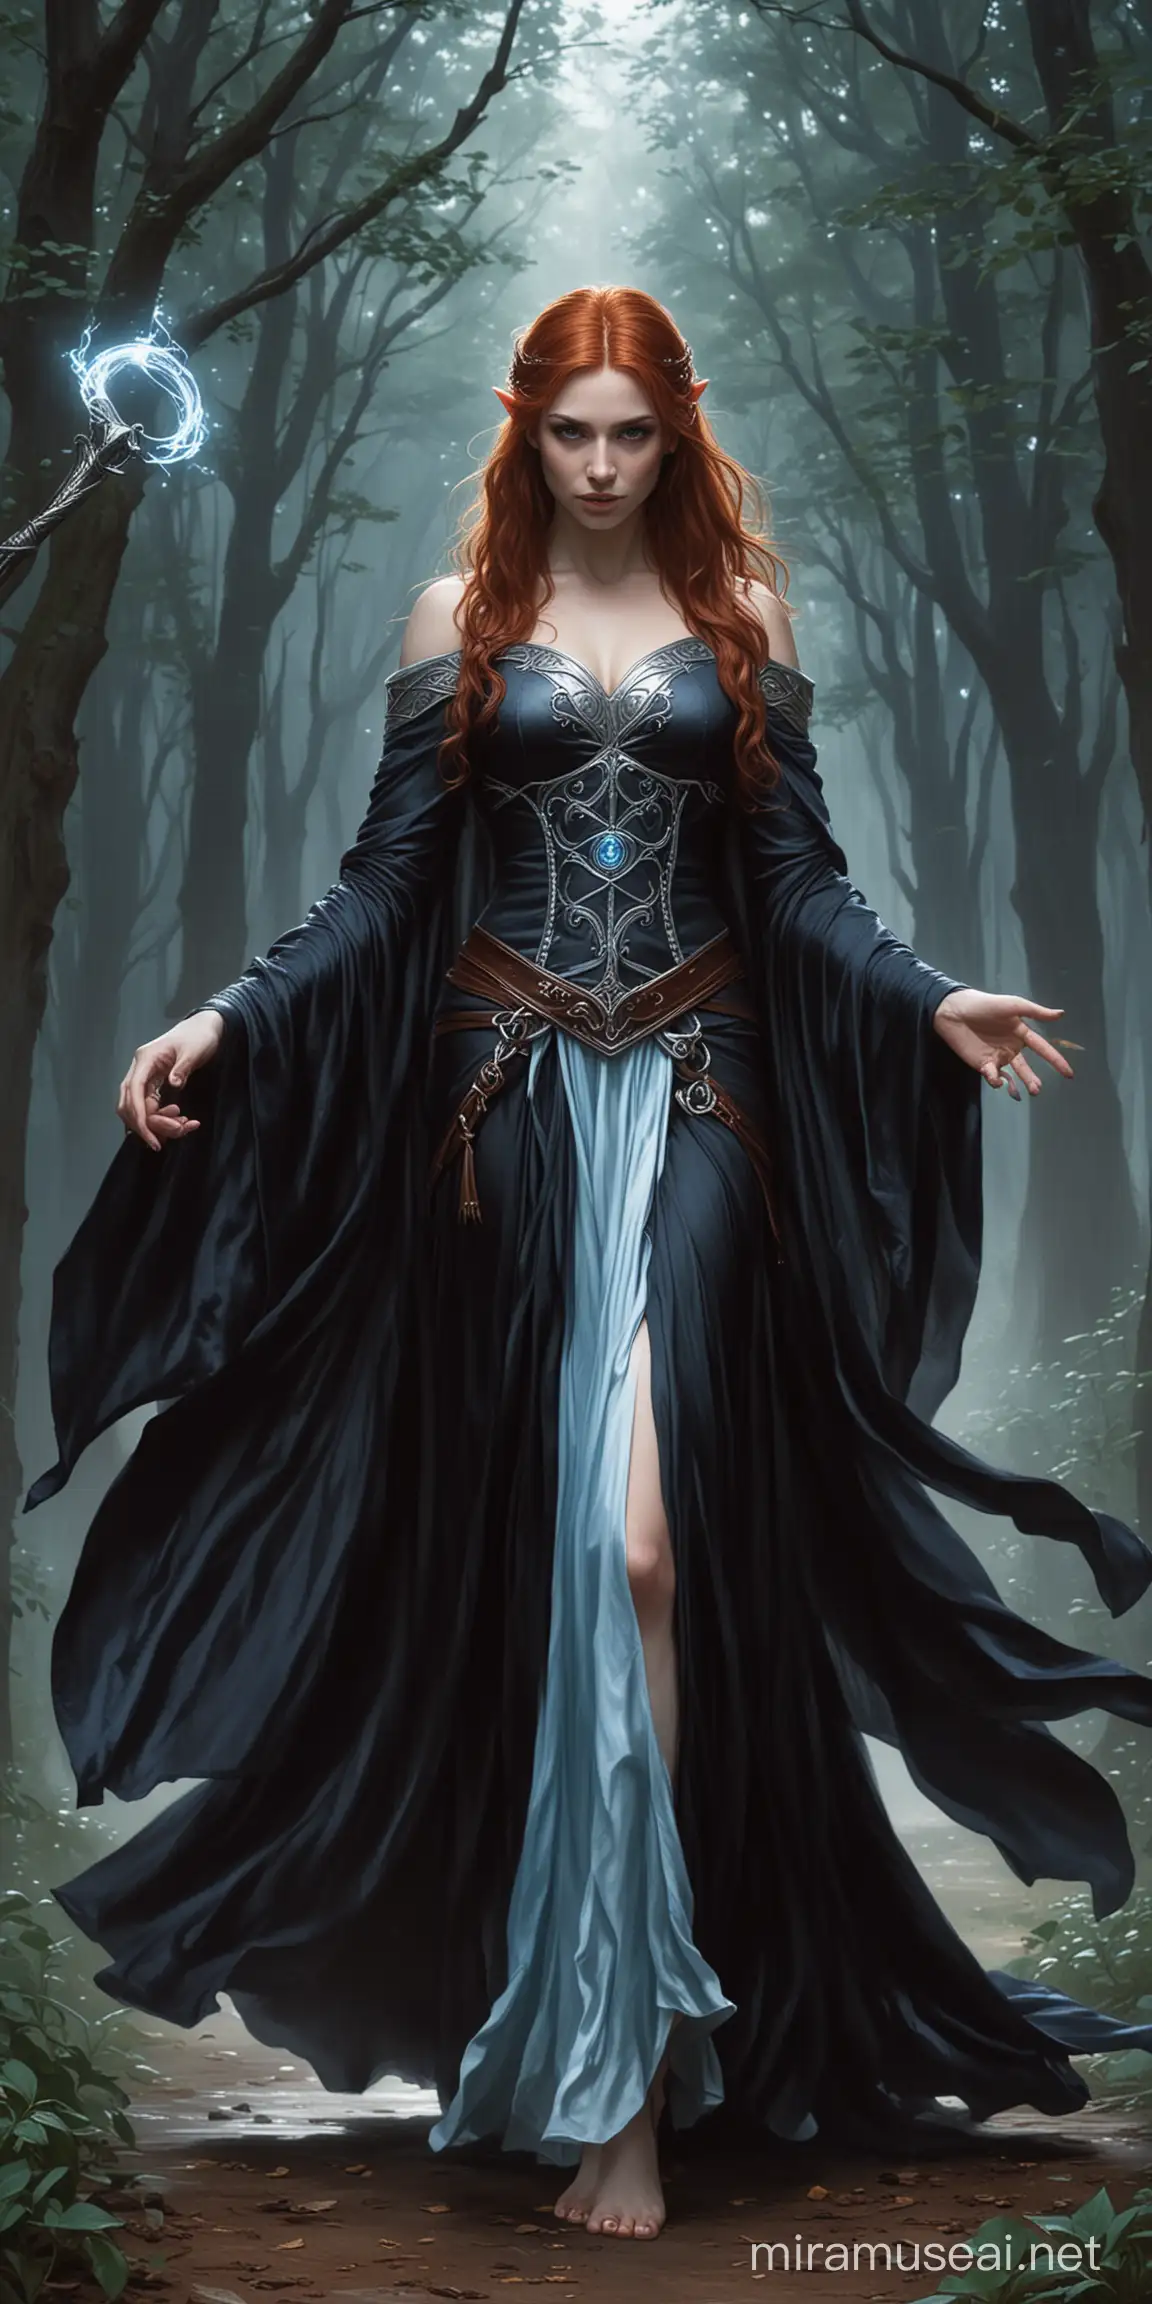 Wiry HalfElf Dancer in Dark Robes with Selune Symbol in Forgotten Realms Fantasy Setting